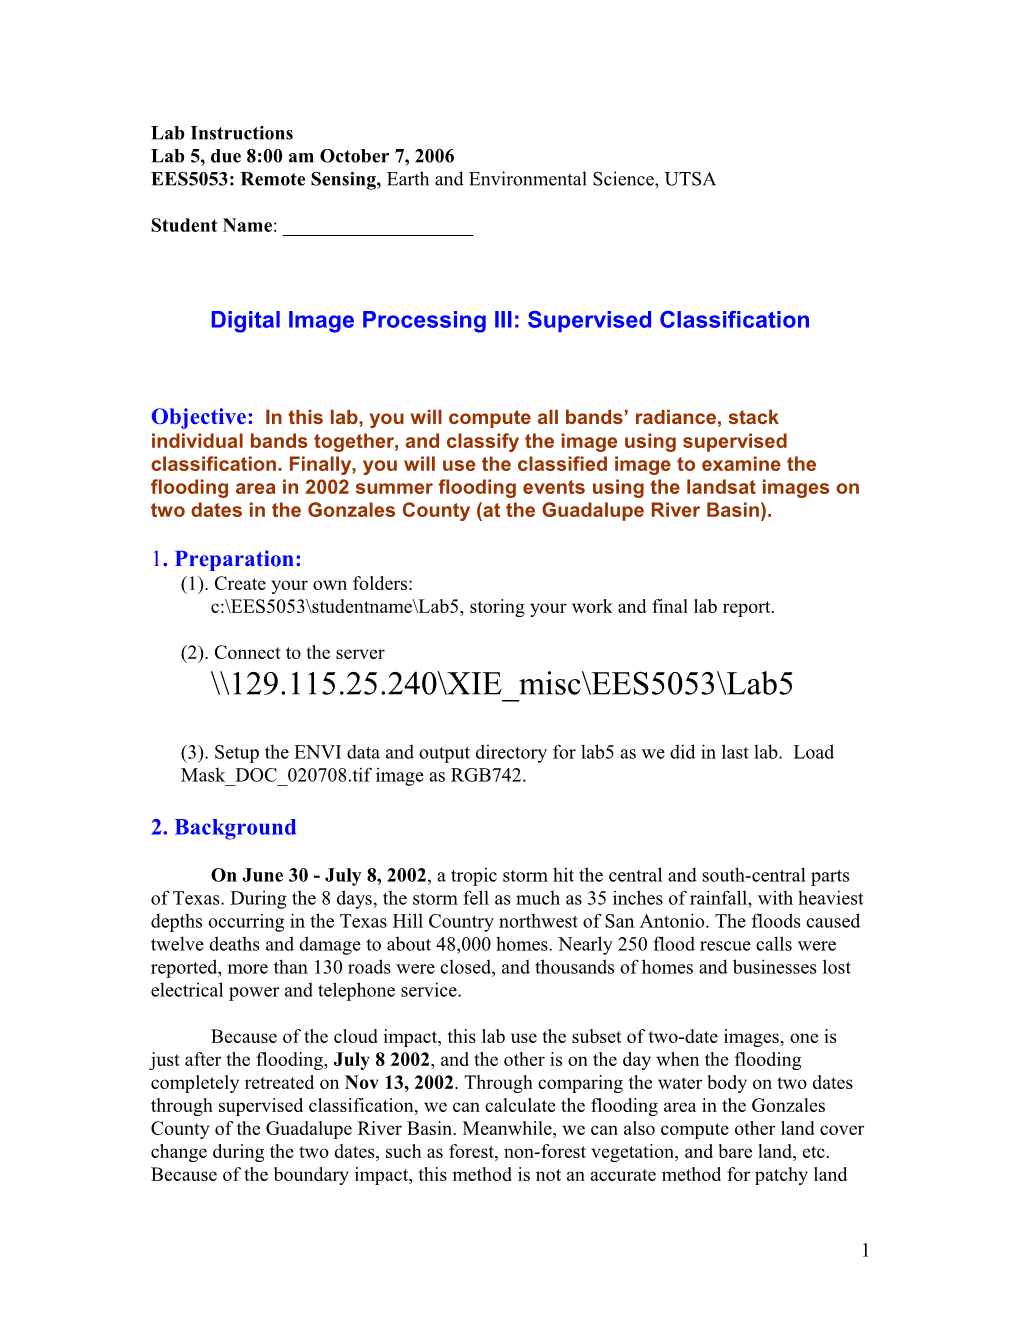 Digital Image Processing III: Supervised Classification